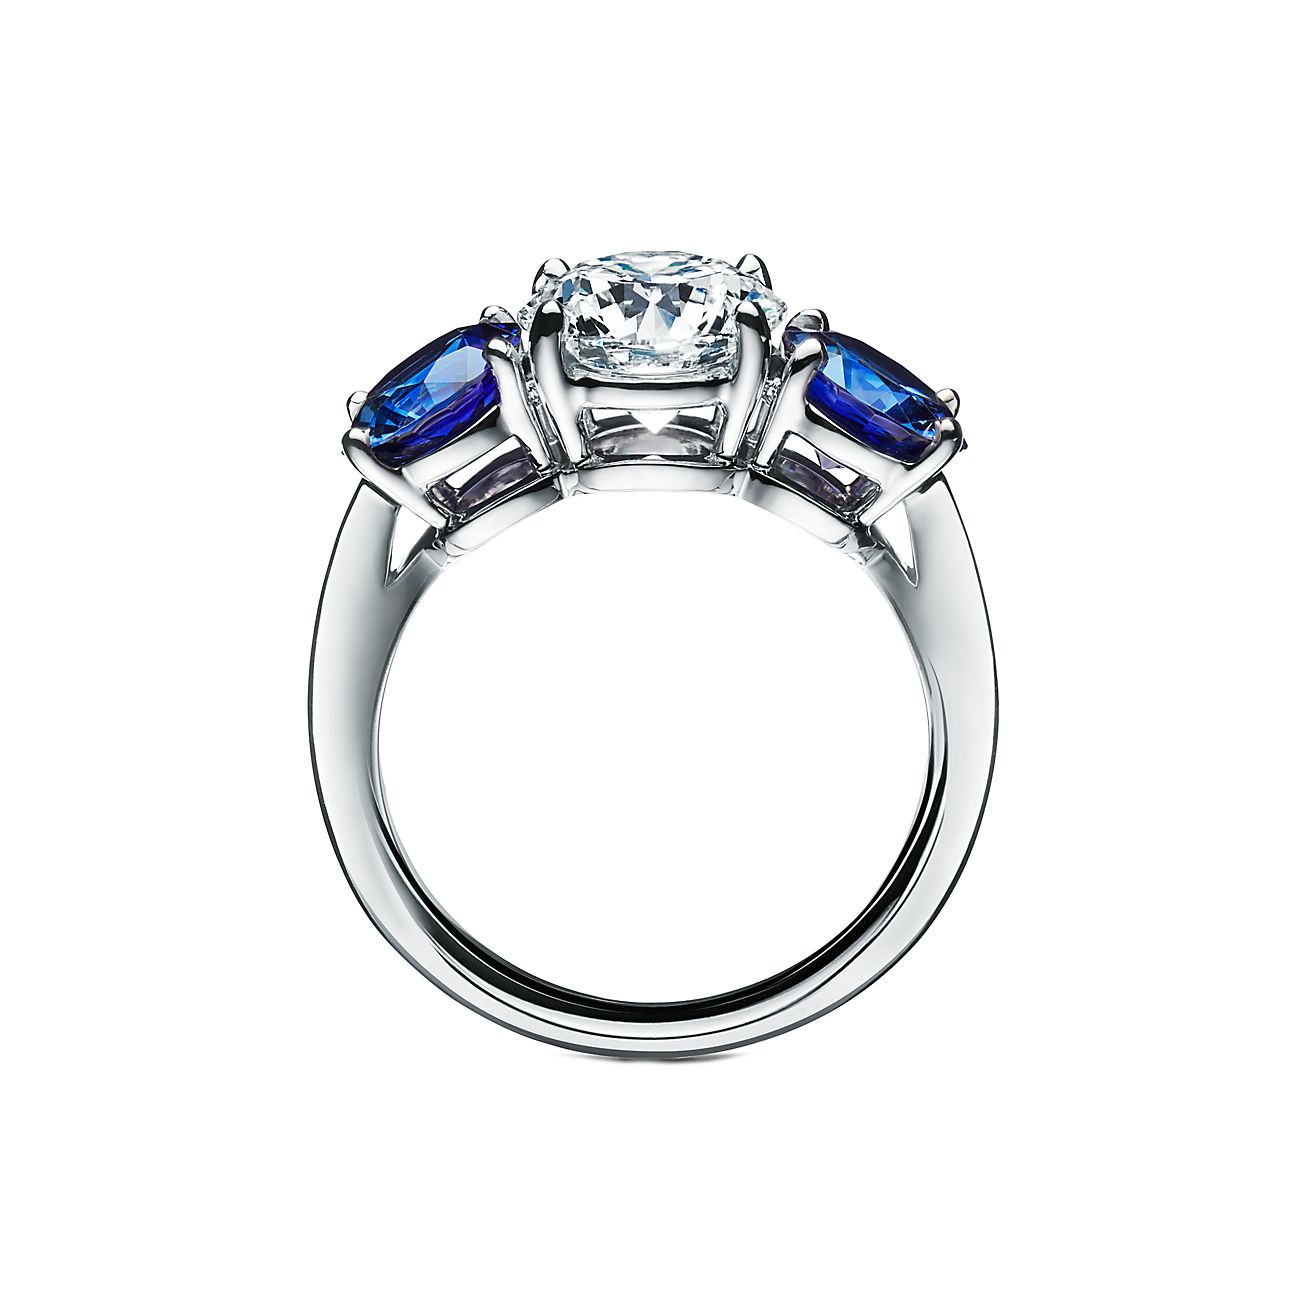 tiffany's sapphire engagement ring